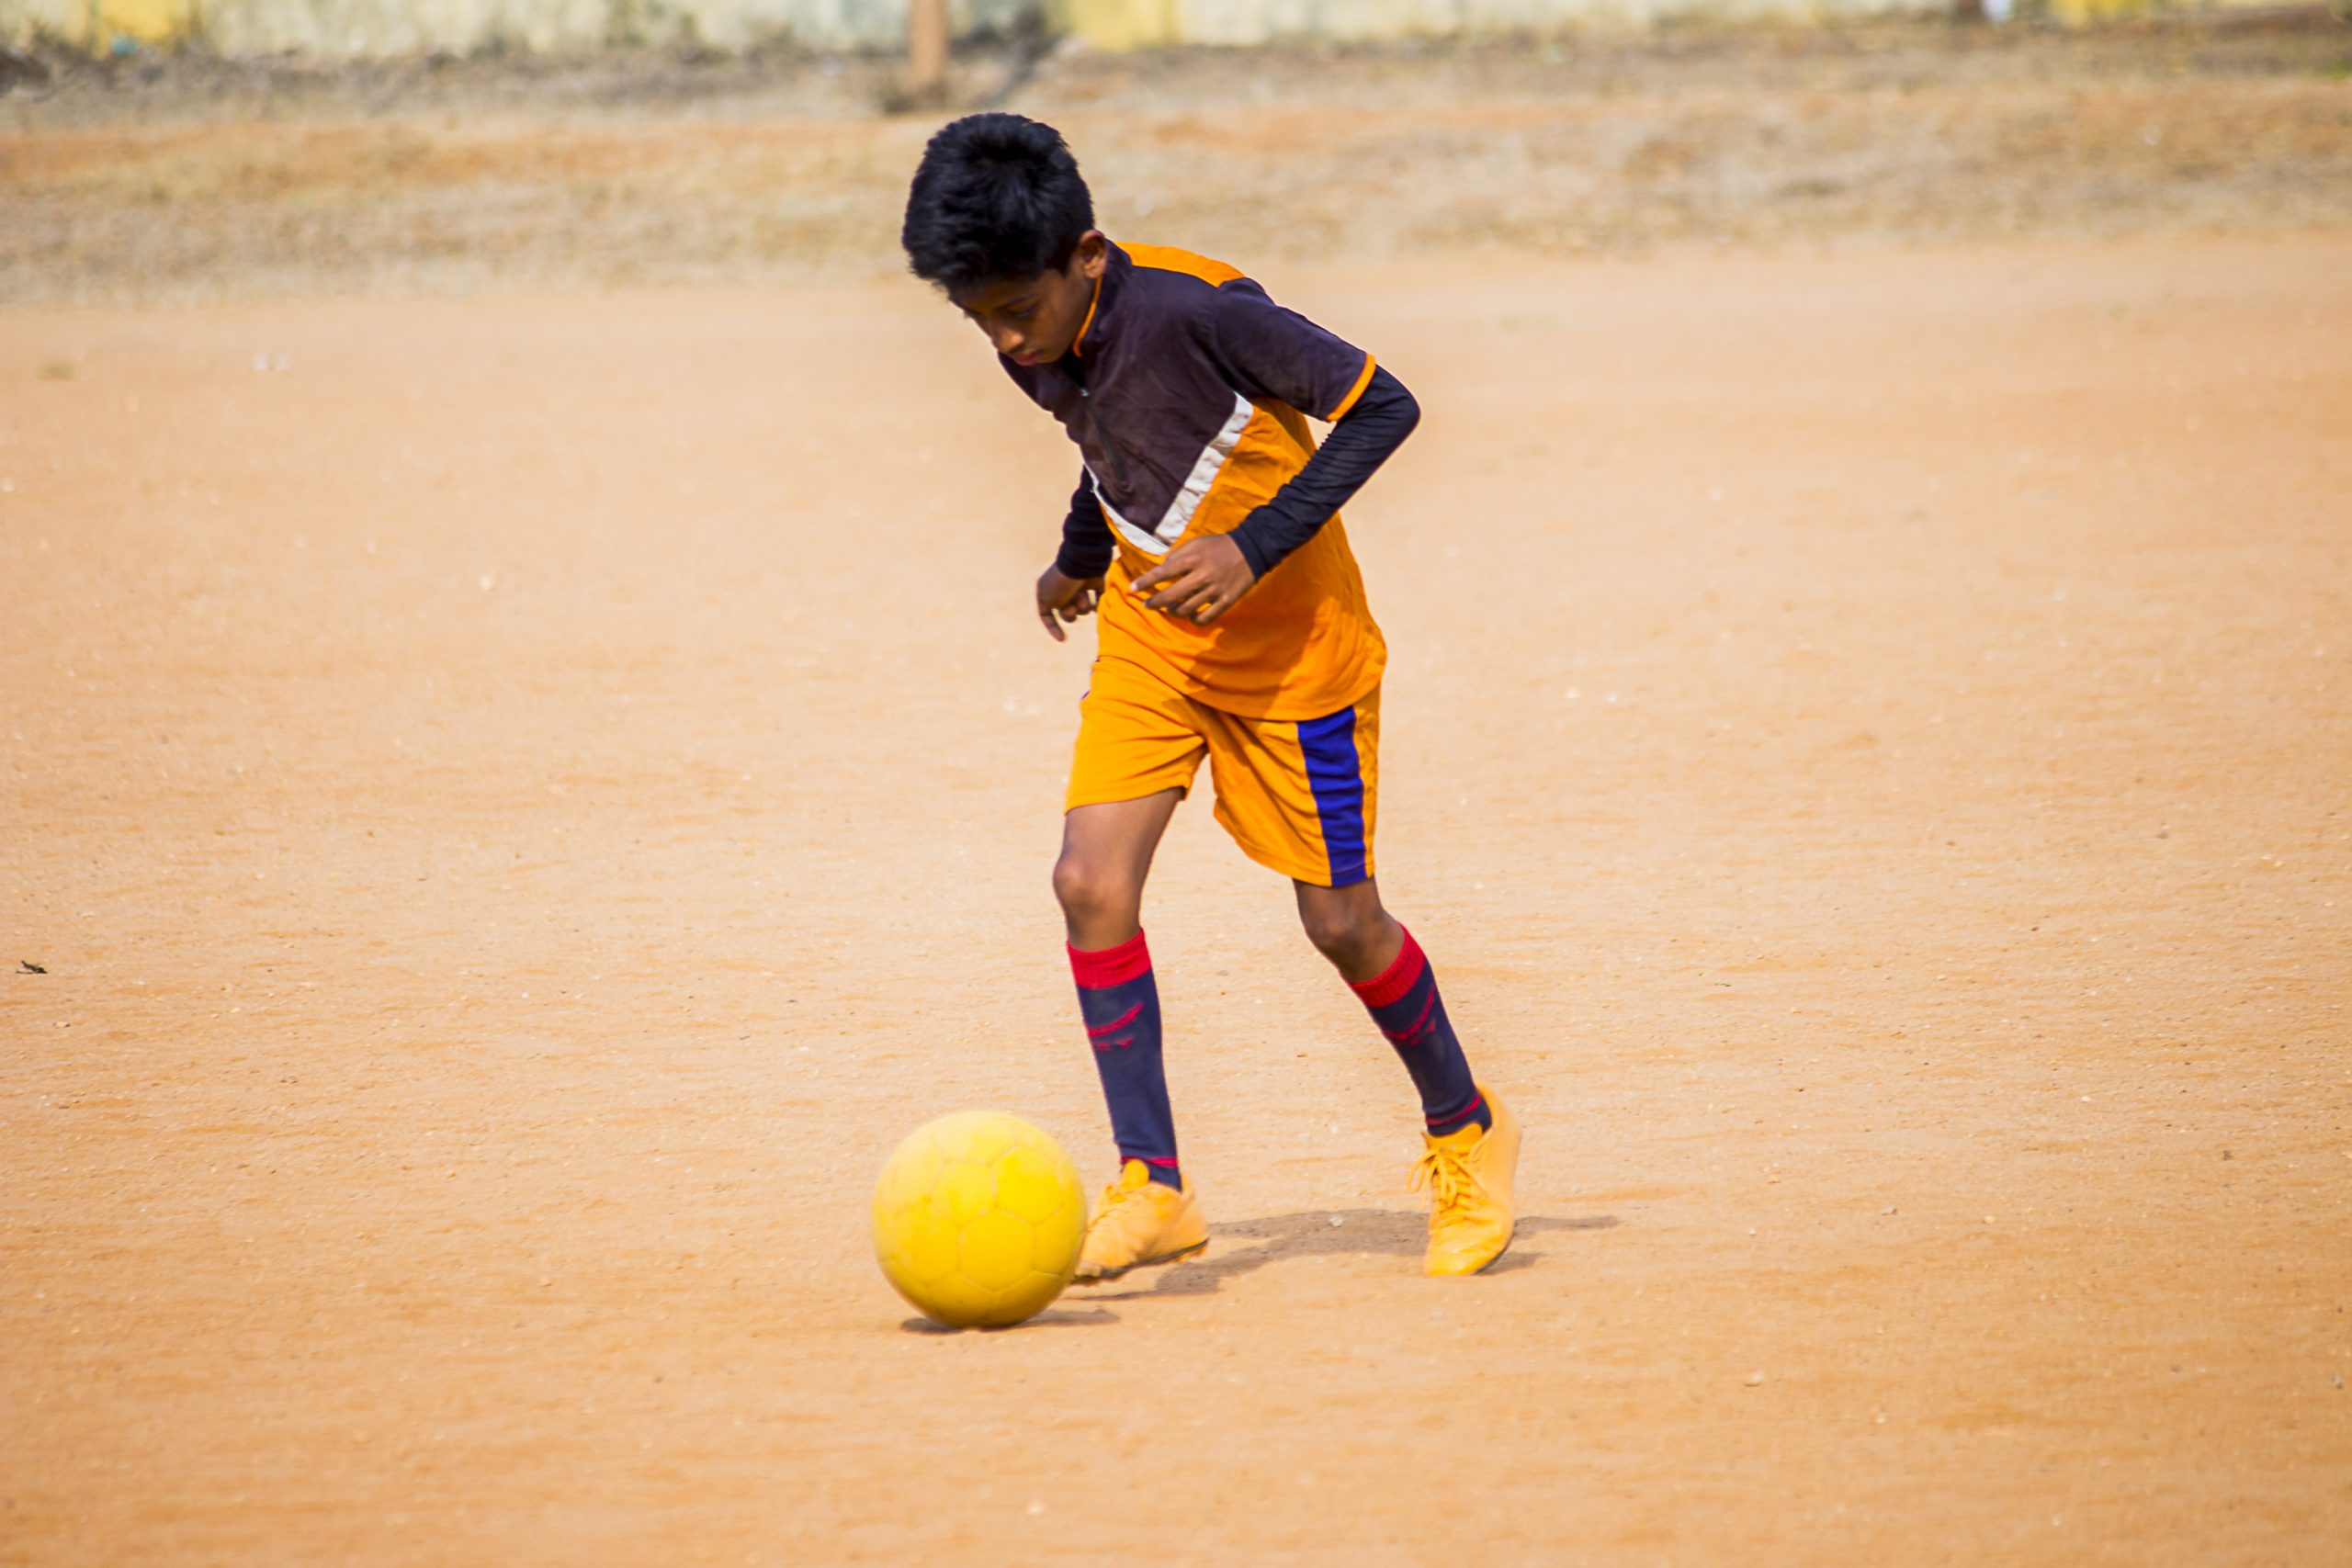 A Boy Playing Football